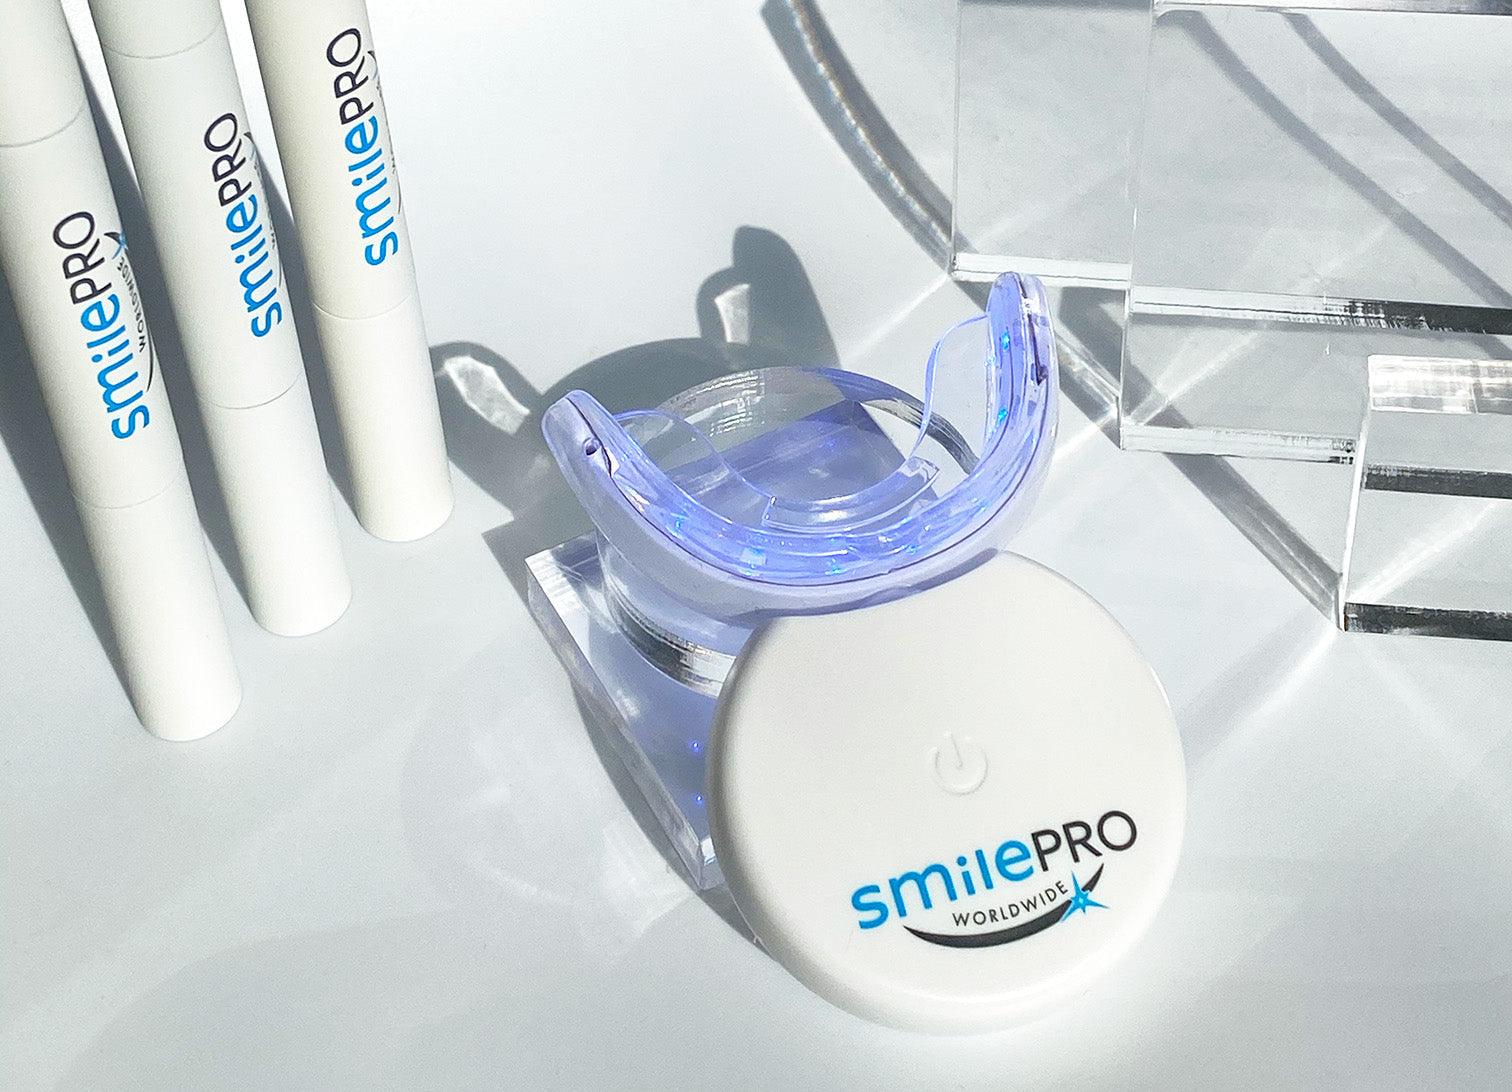 Professional Teeth Whitening - Kits vs Dentist